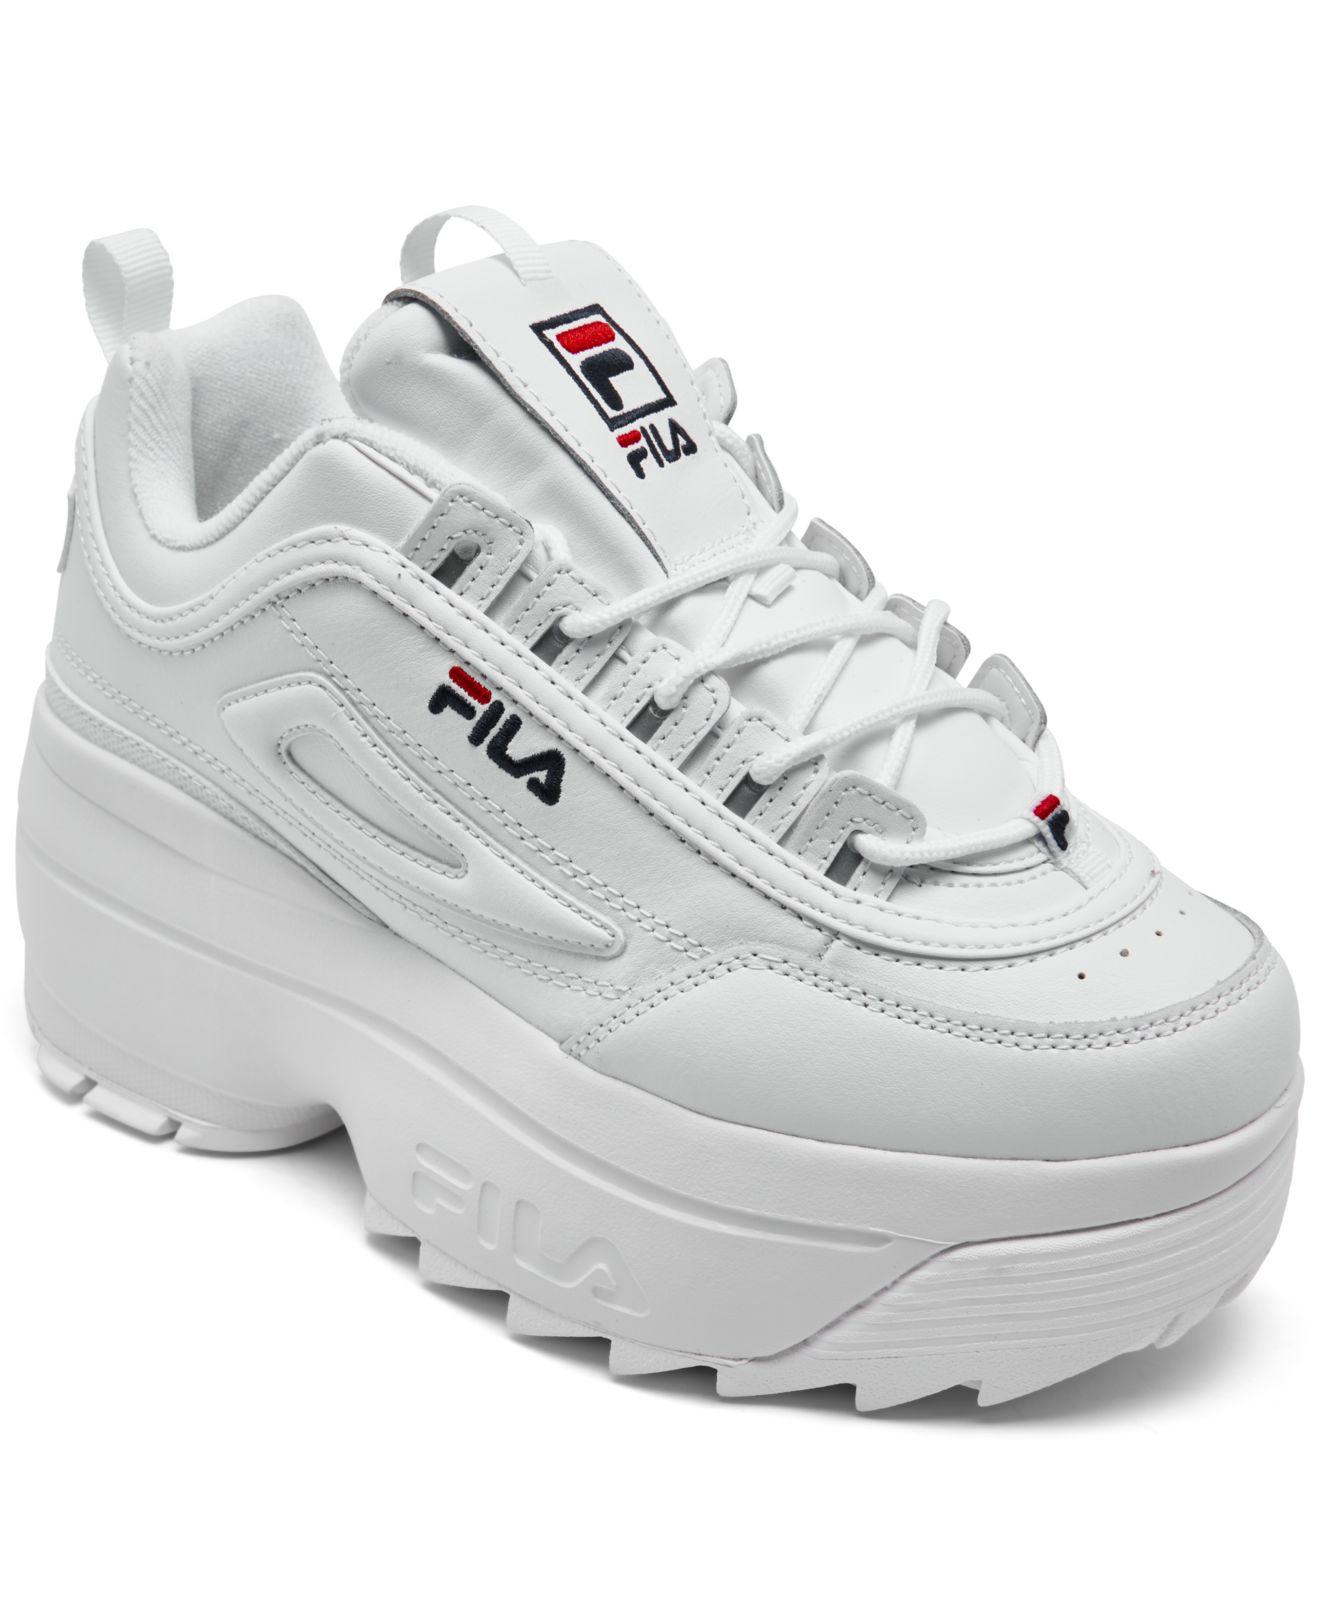 Fila Disruptor Sneakers Finish Line in White | Lyst